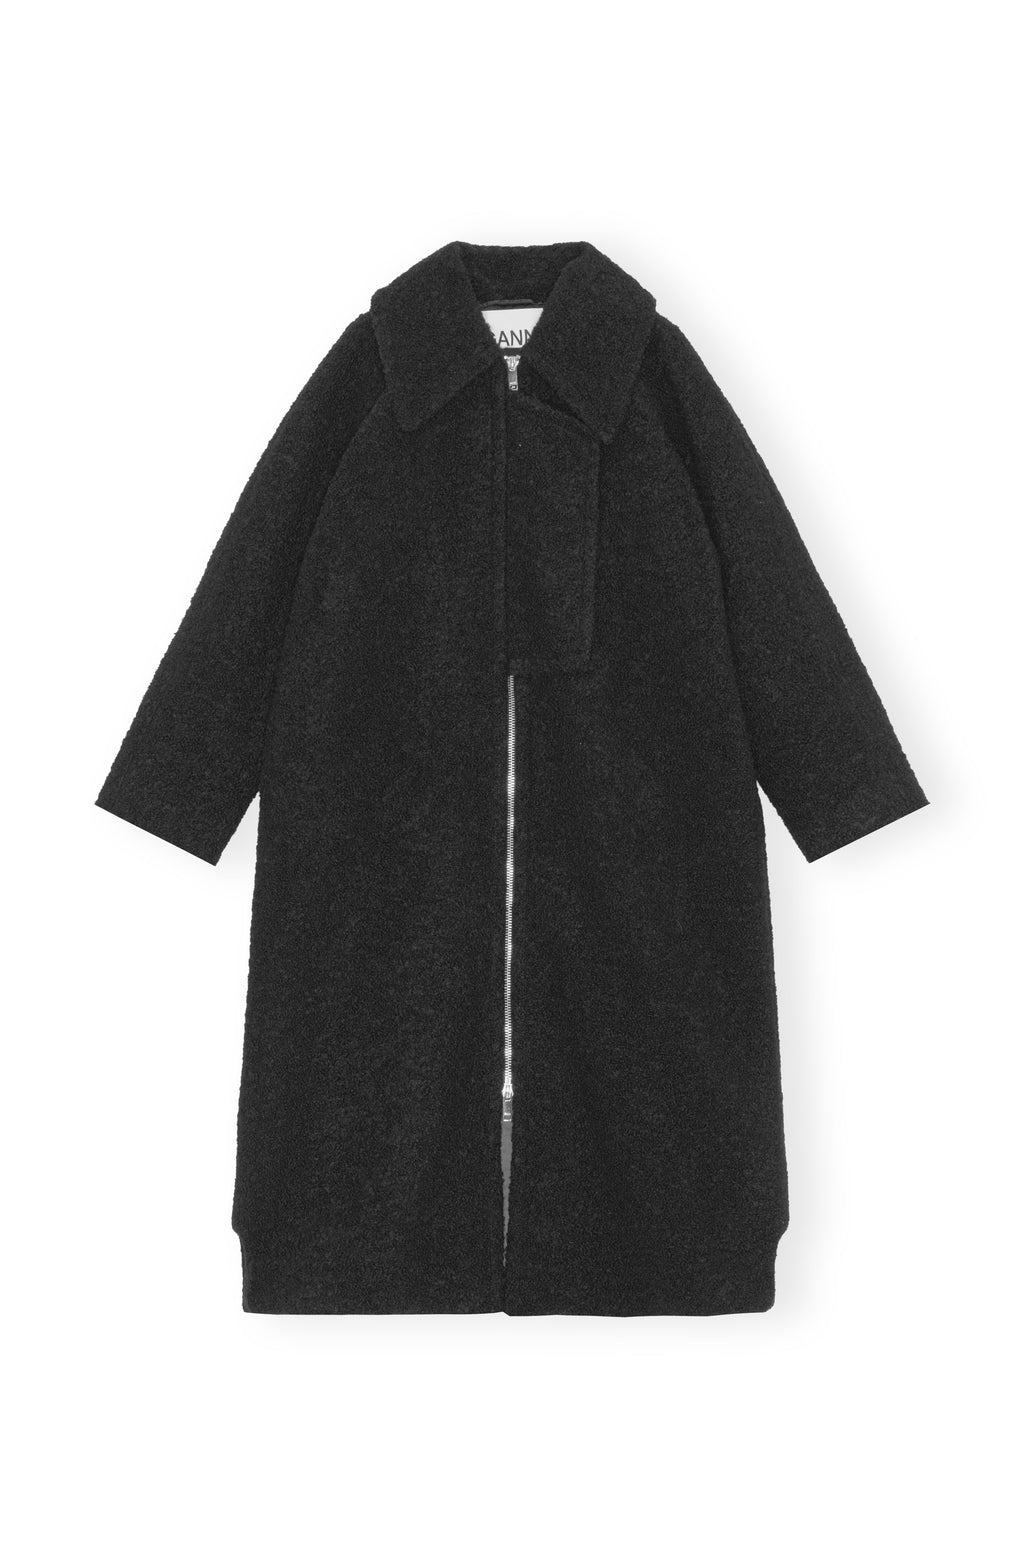 Boucle Wool Coat